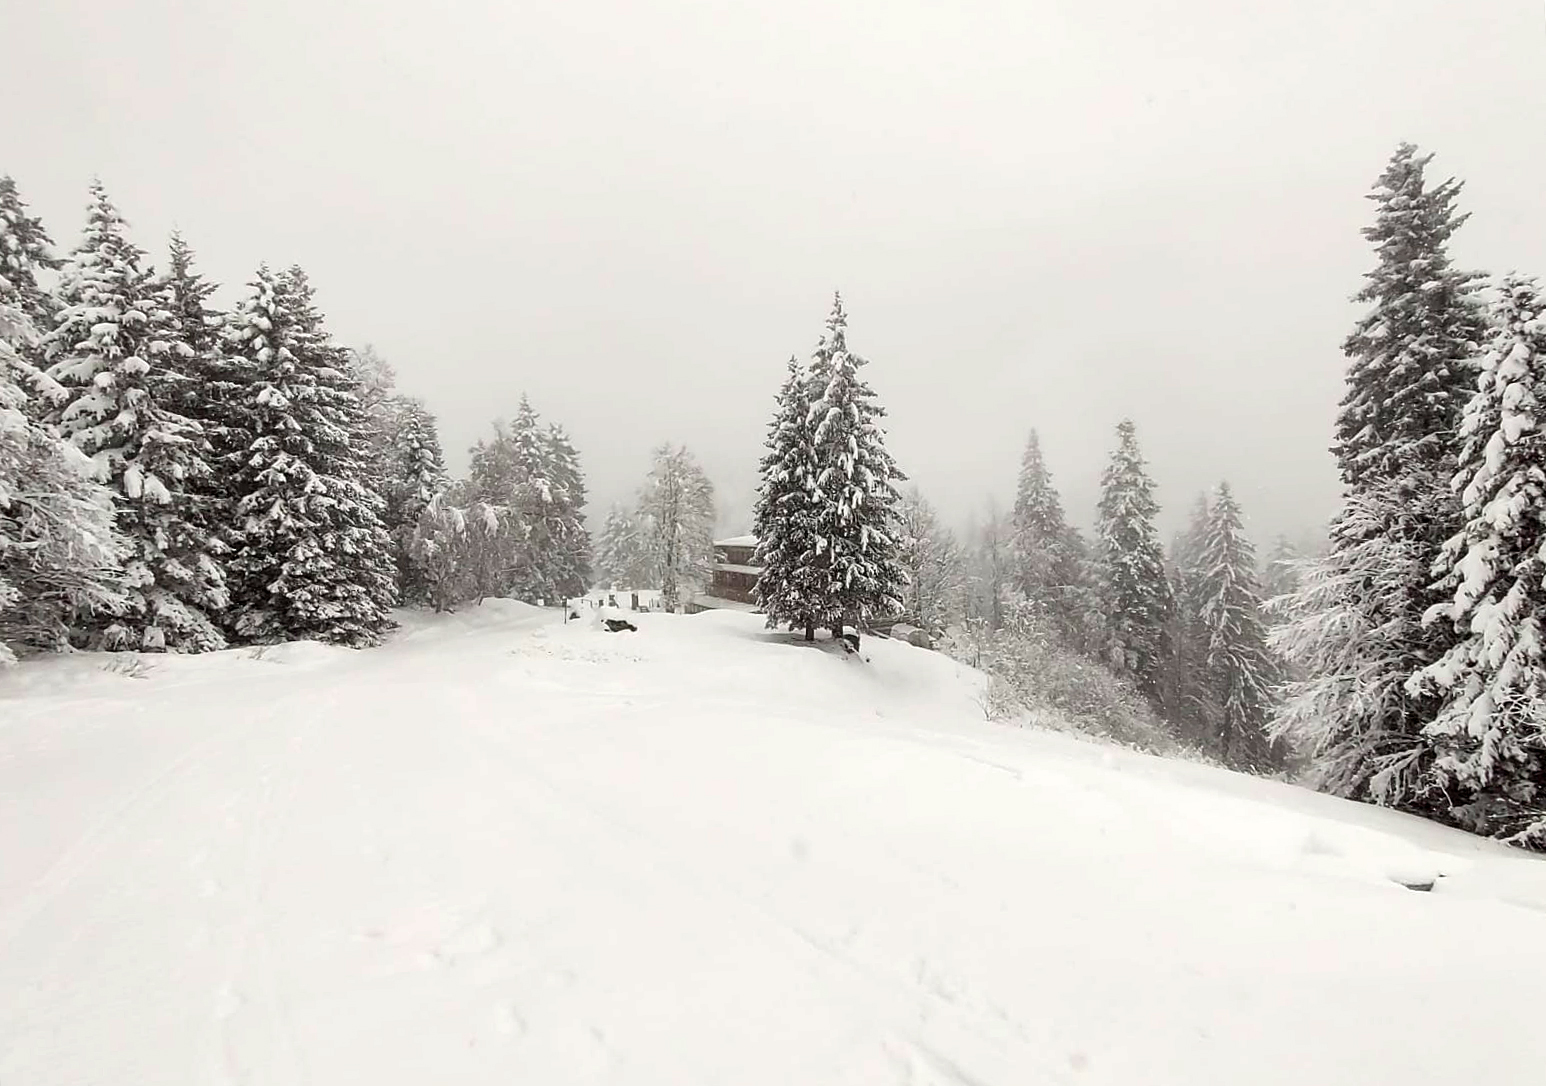 Heavy snowfall in Fai della Paganella, Italy